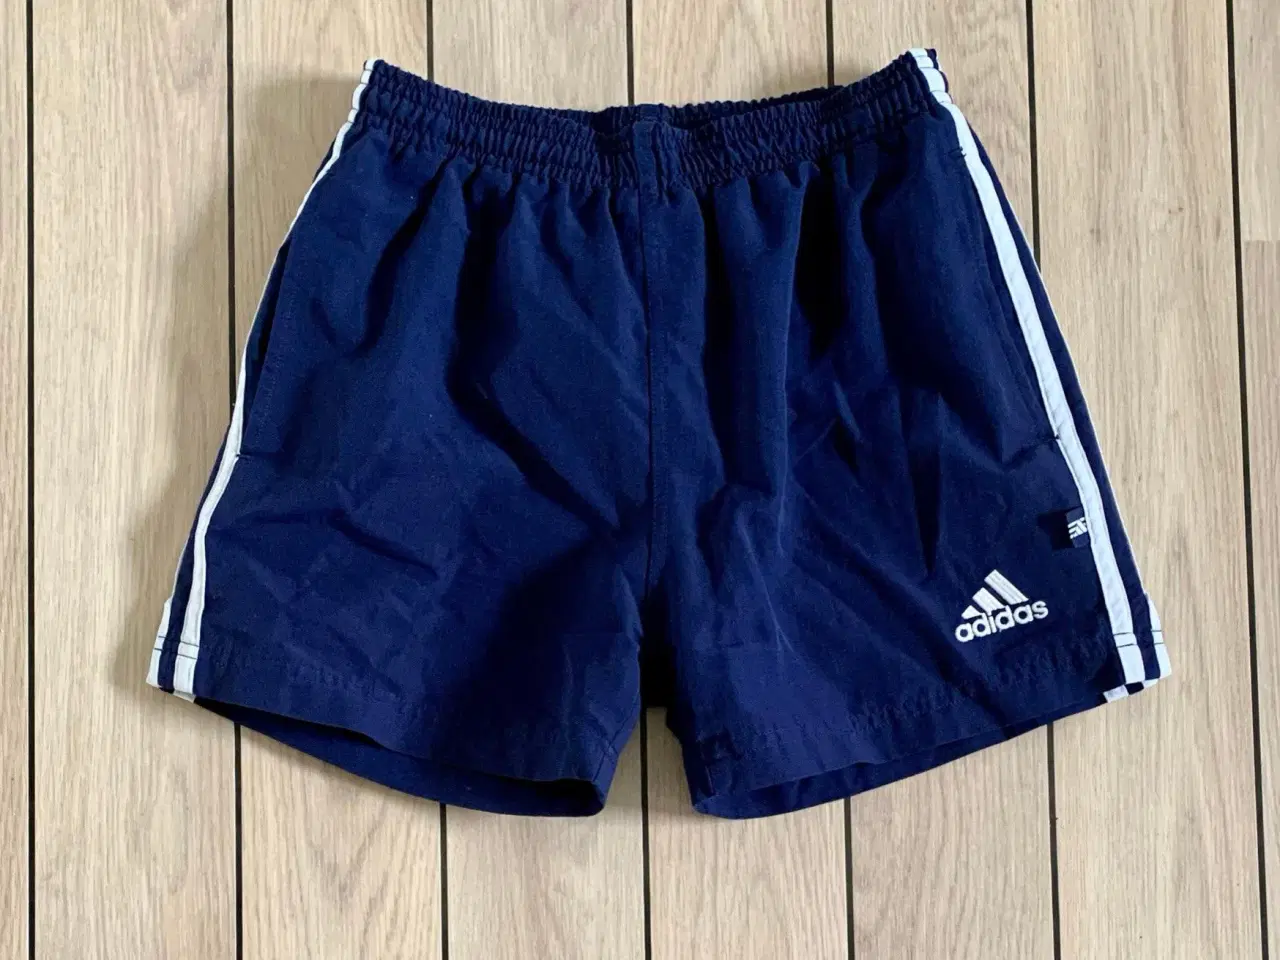 Billede 6 - Adidas shorts str. 140 i navy Adidas 3 stripes